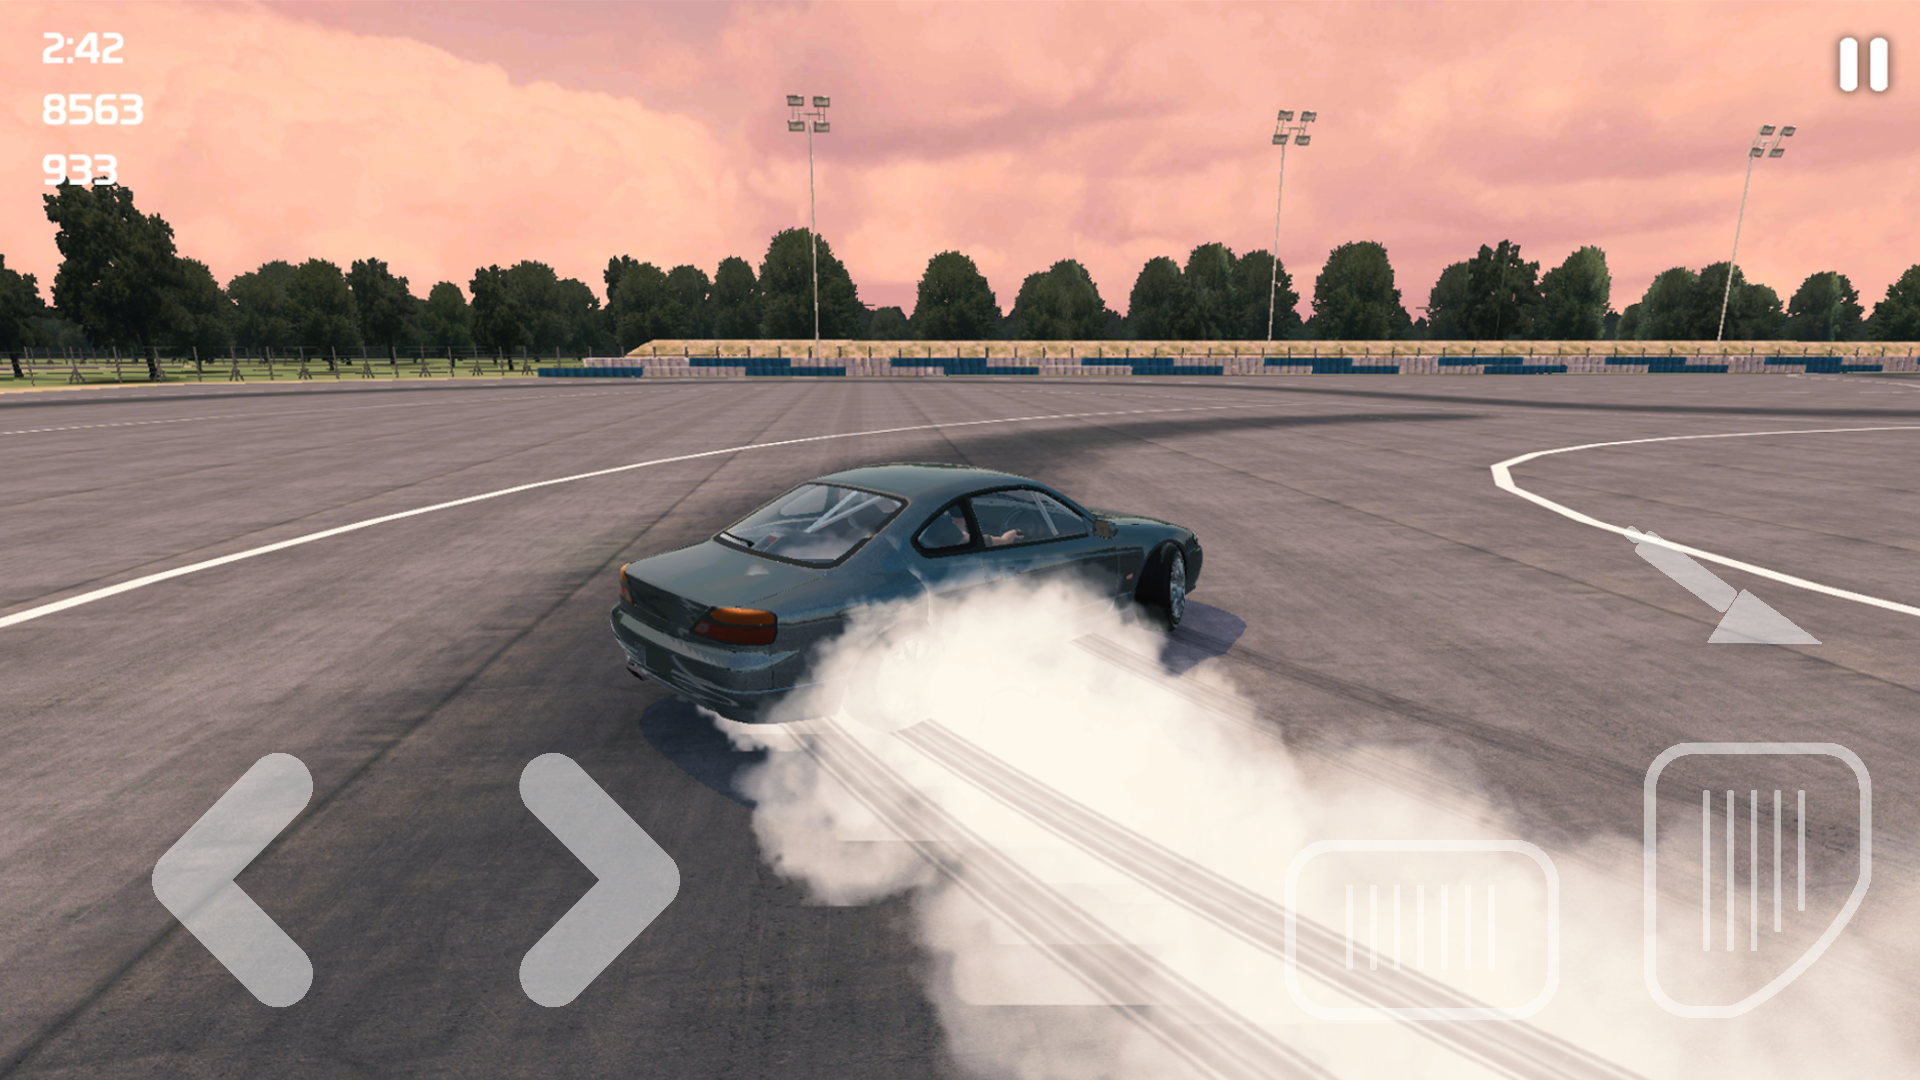 Screenshot 1 of ड्रिफ्ट फैनेटिक्स स्पोर्ट्स कार ड्रिफ्टिंग रेस 1.049